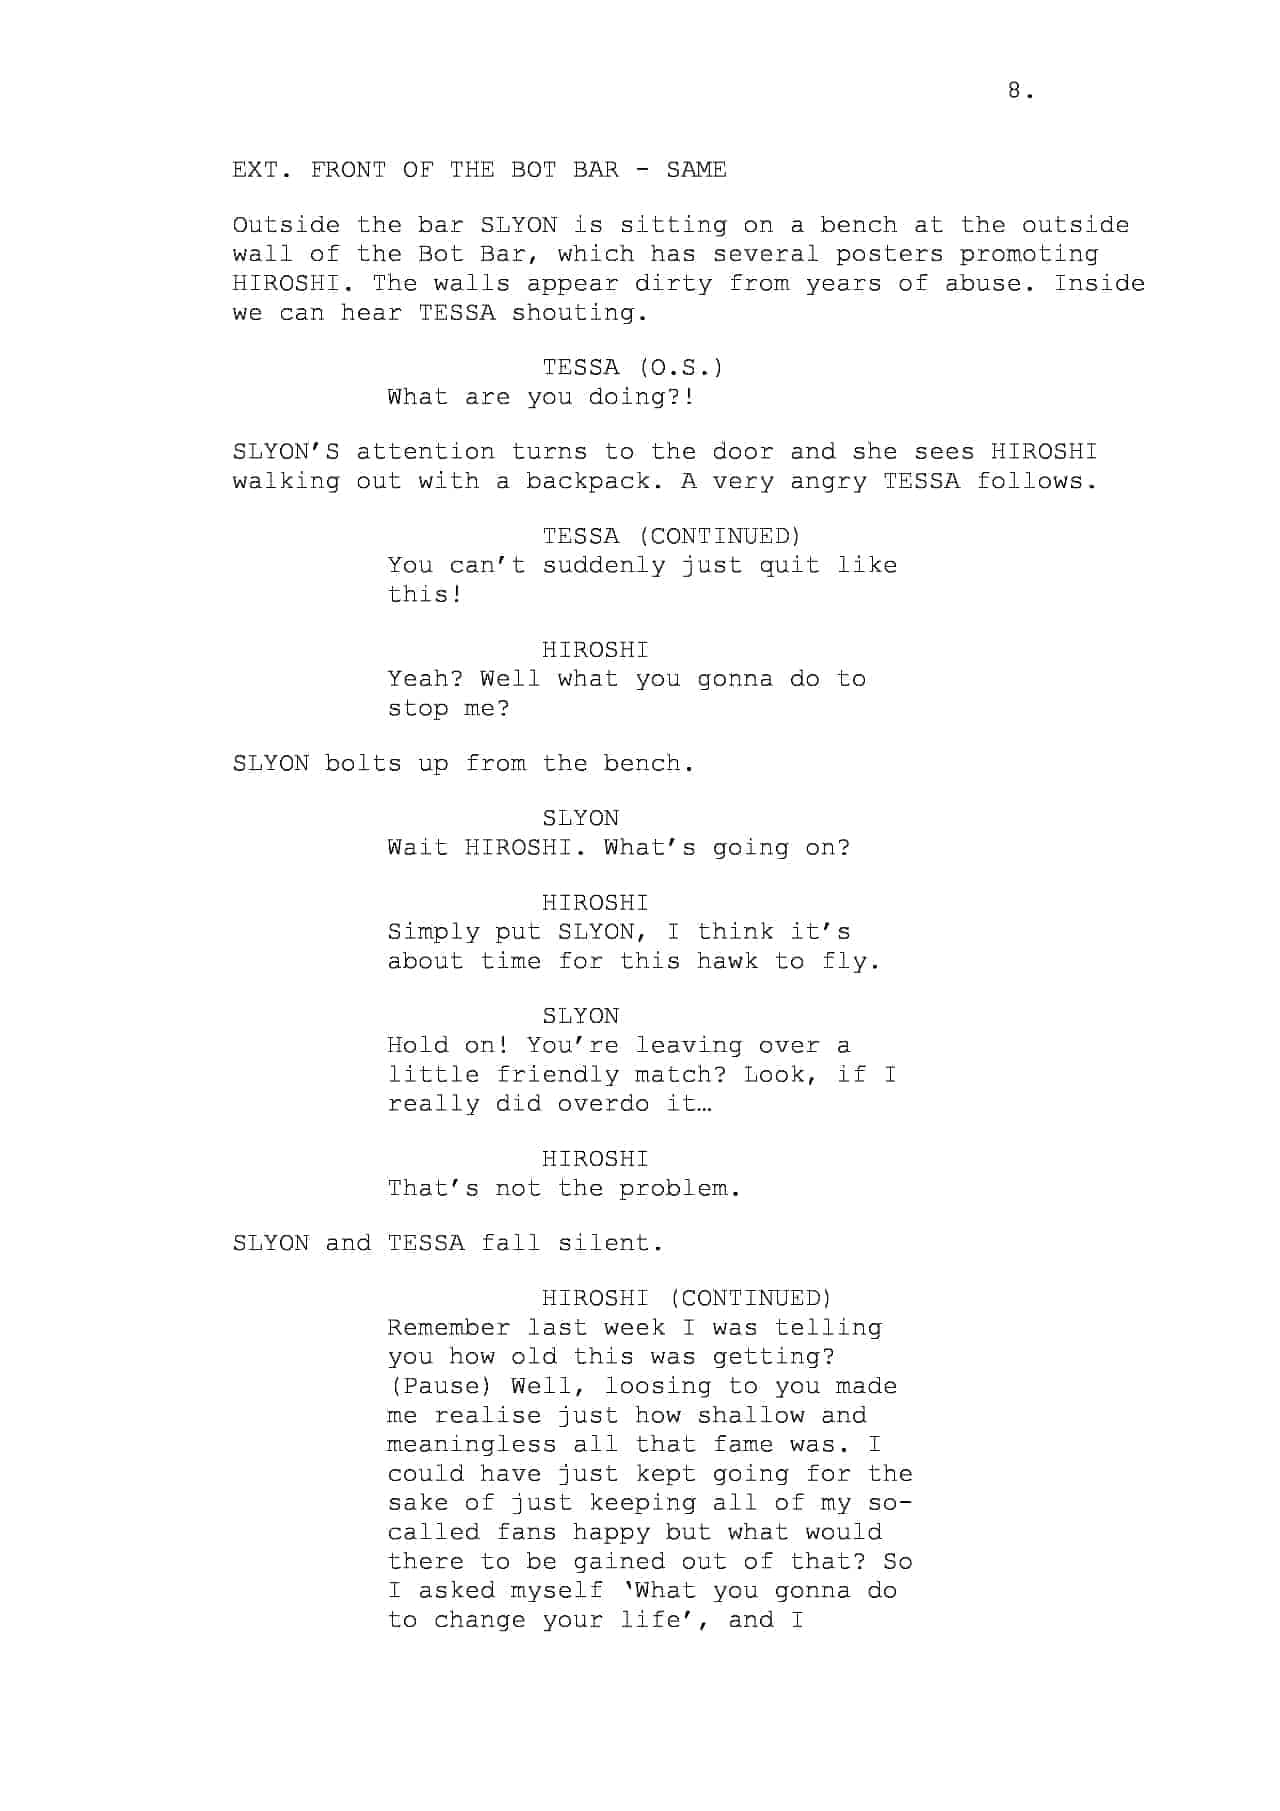 How to Write A Movie Script